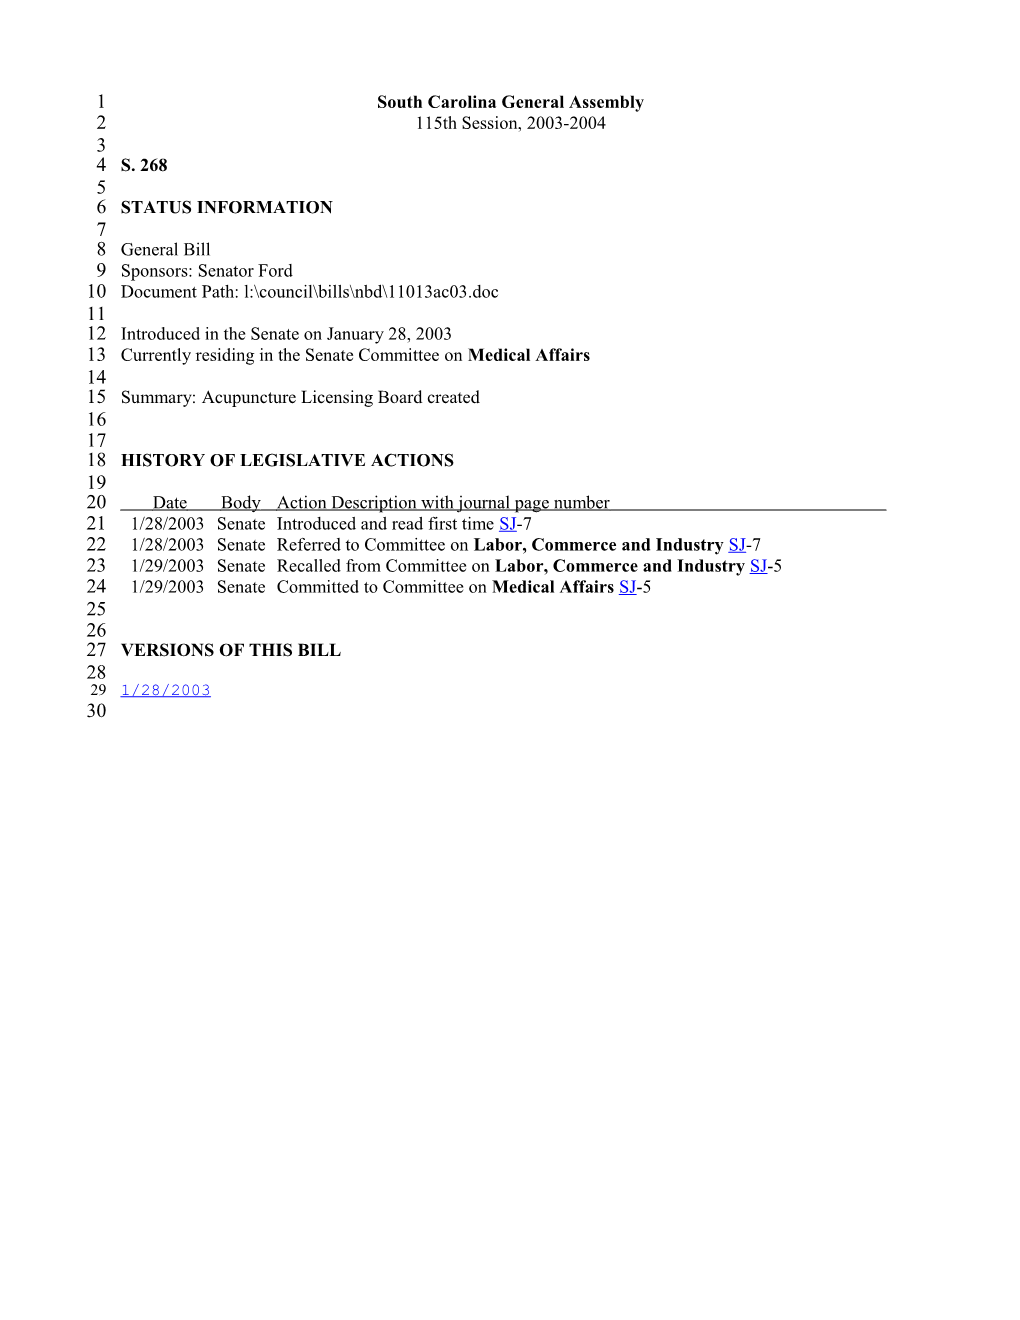 2003-2004 Bill 268: Acupuncture Licensing Board Created - South Carolina Legislature Online